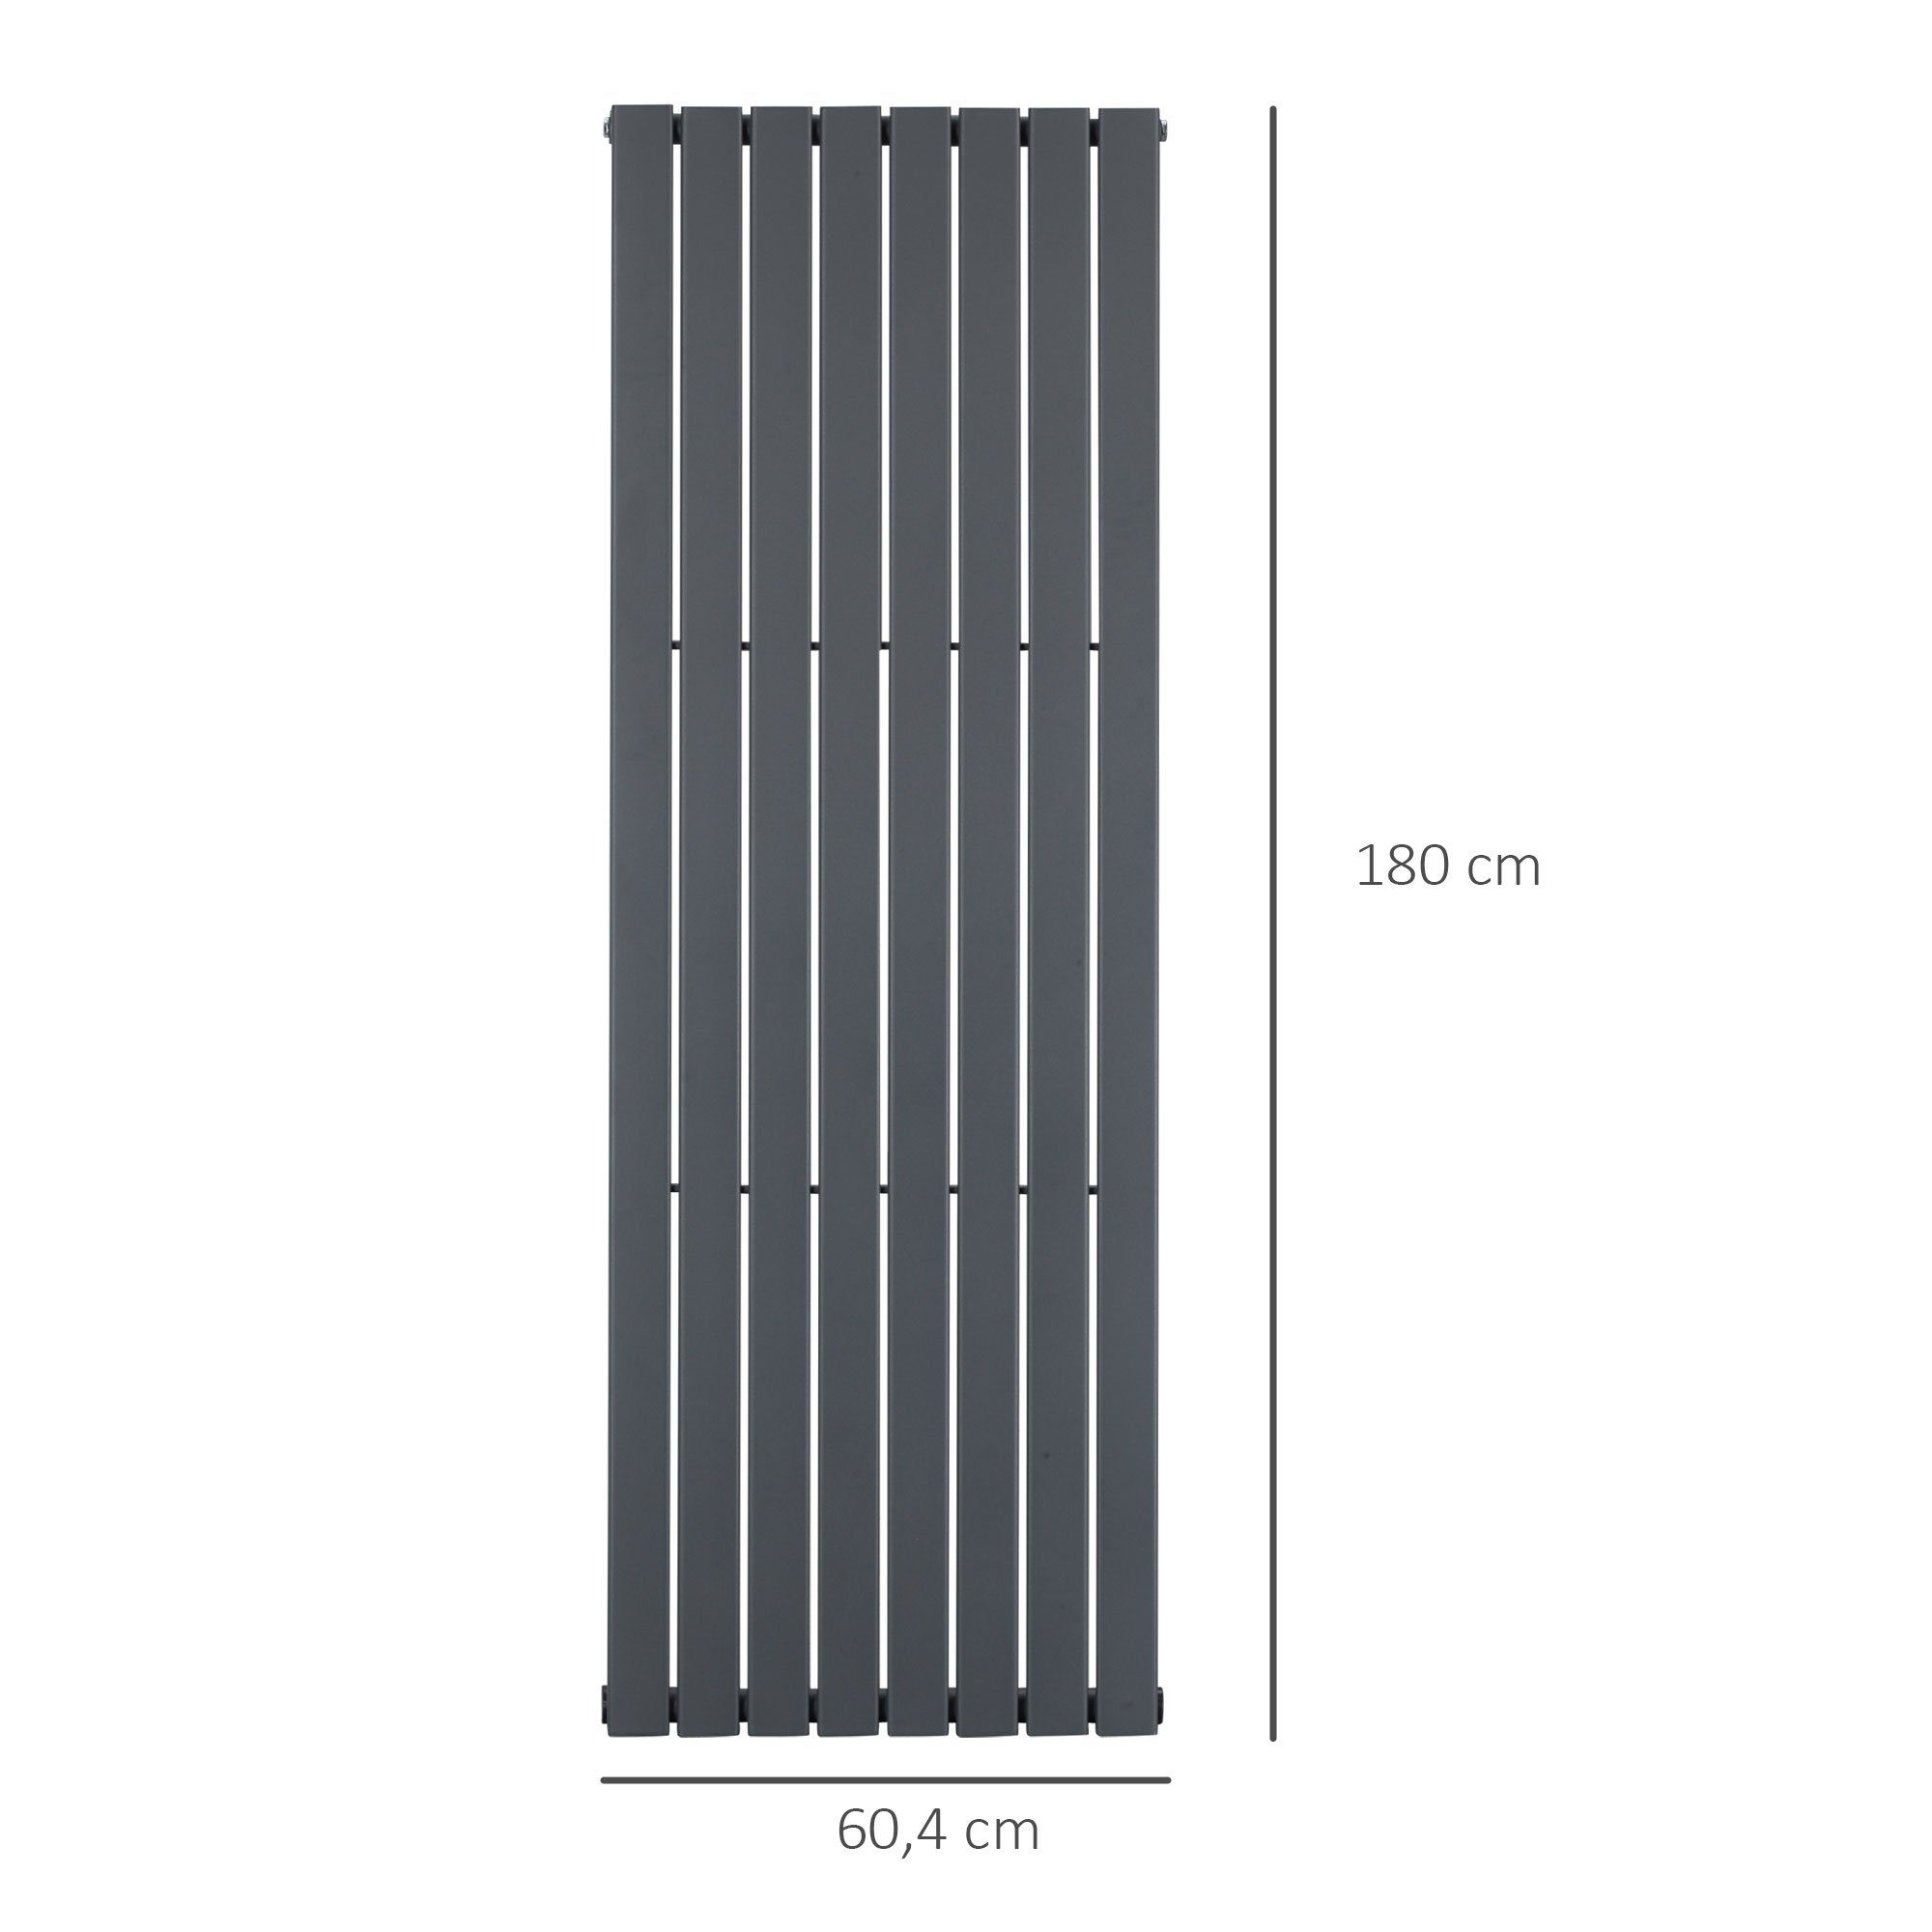 HOMCOM Heizlüfter Wandheizung, schnelle Aufwärmung, 60cm Karbonstahl, grau, 180 x